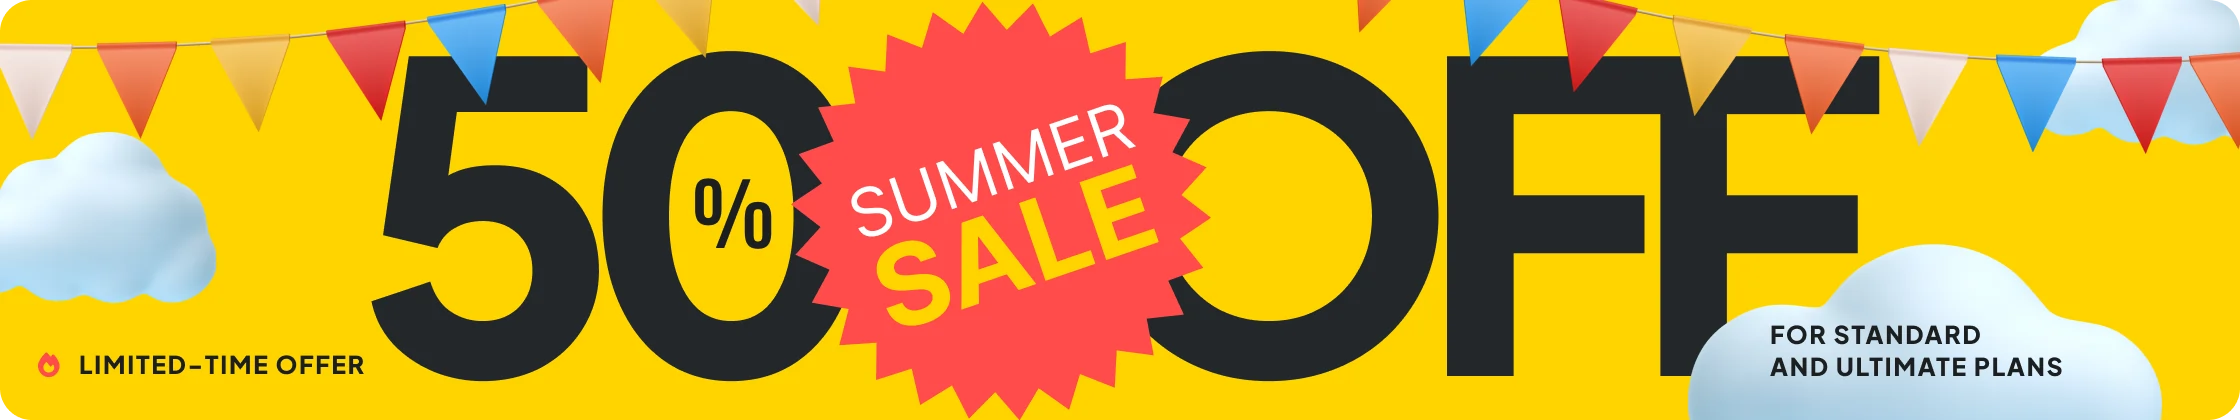 50% off summer sale